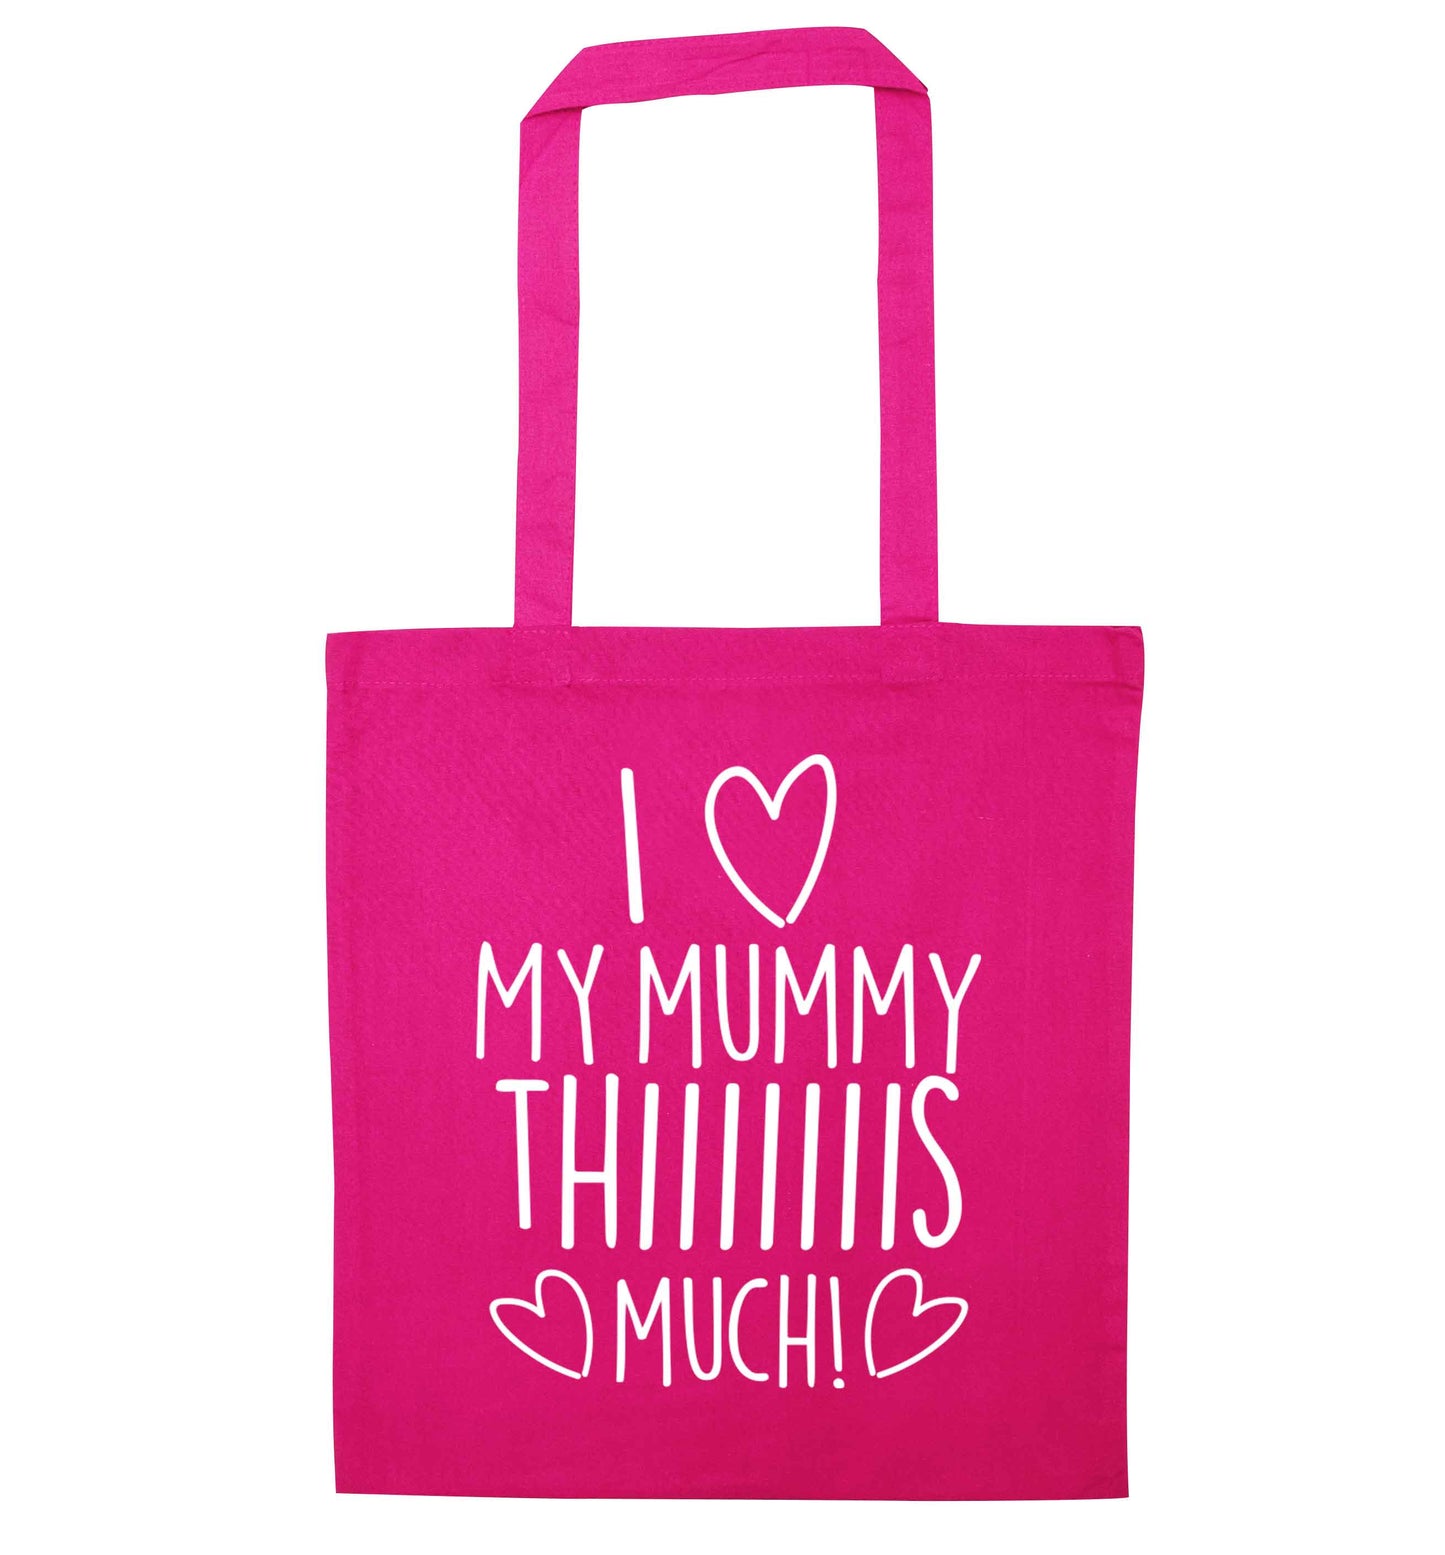 I love my mummy thiiiiis much! pink tote bag